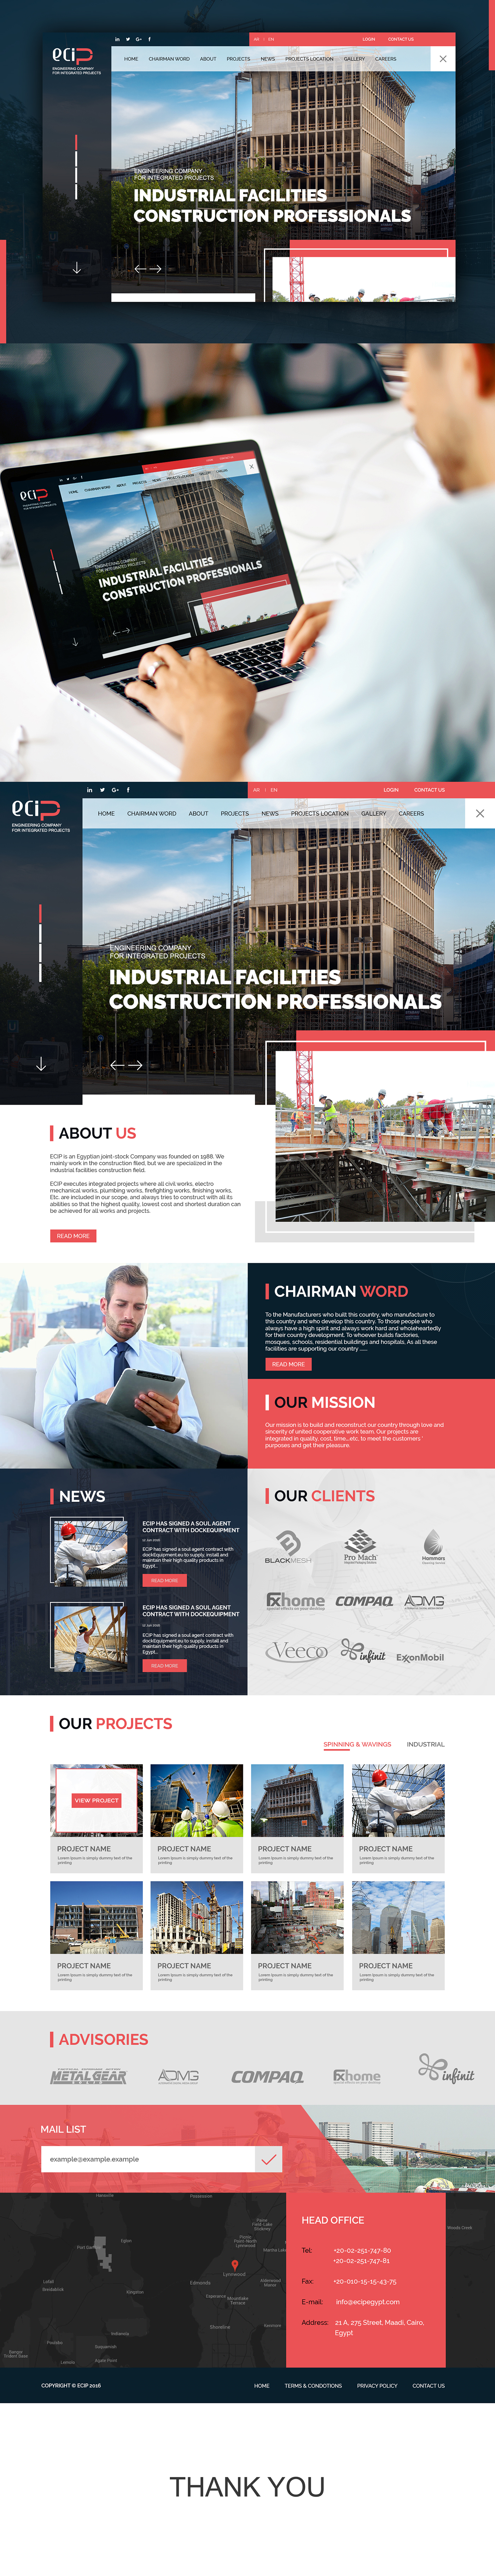 ecip gtc Web design photoshop site UI ux psd Webdesign creative agency company Website template